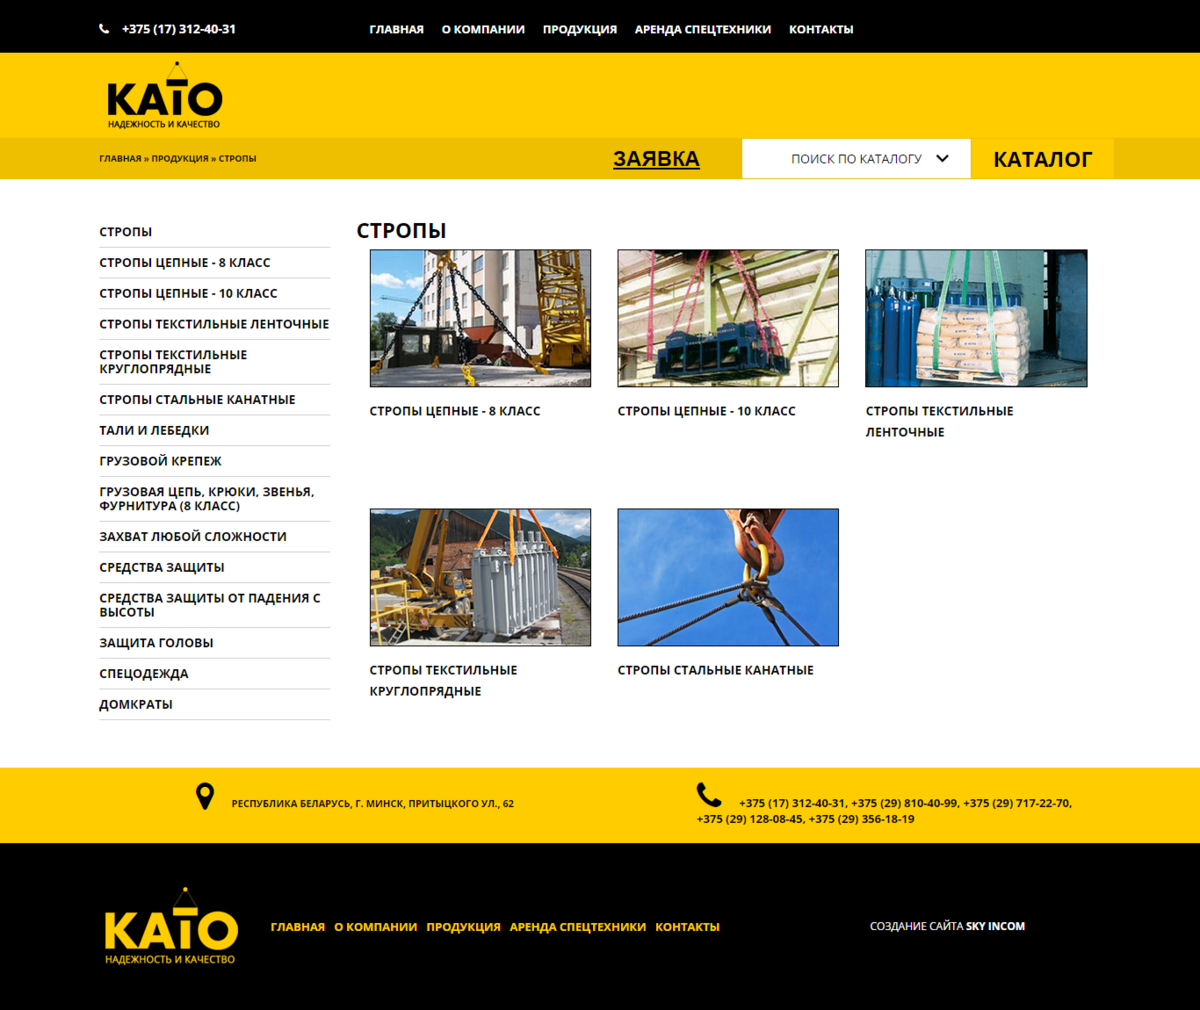 Lifting technology - KATO